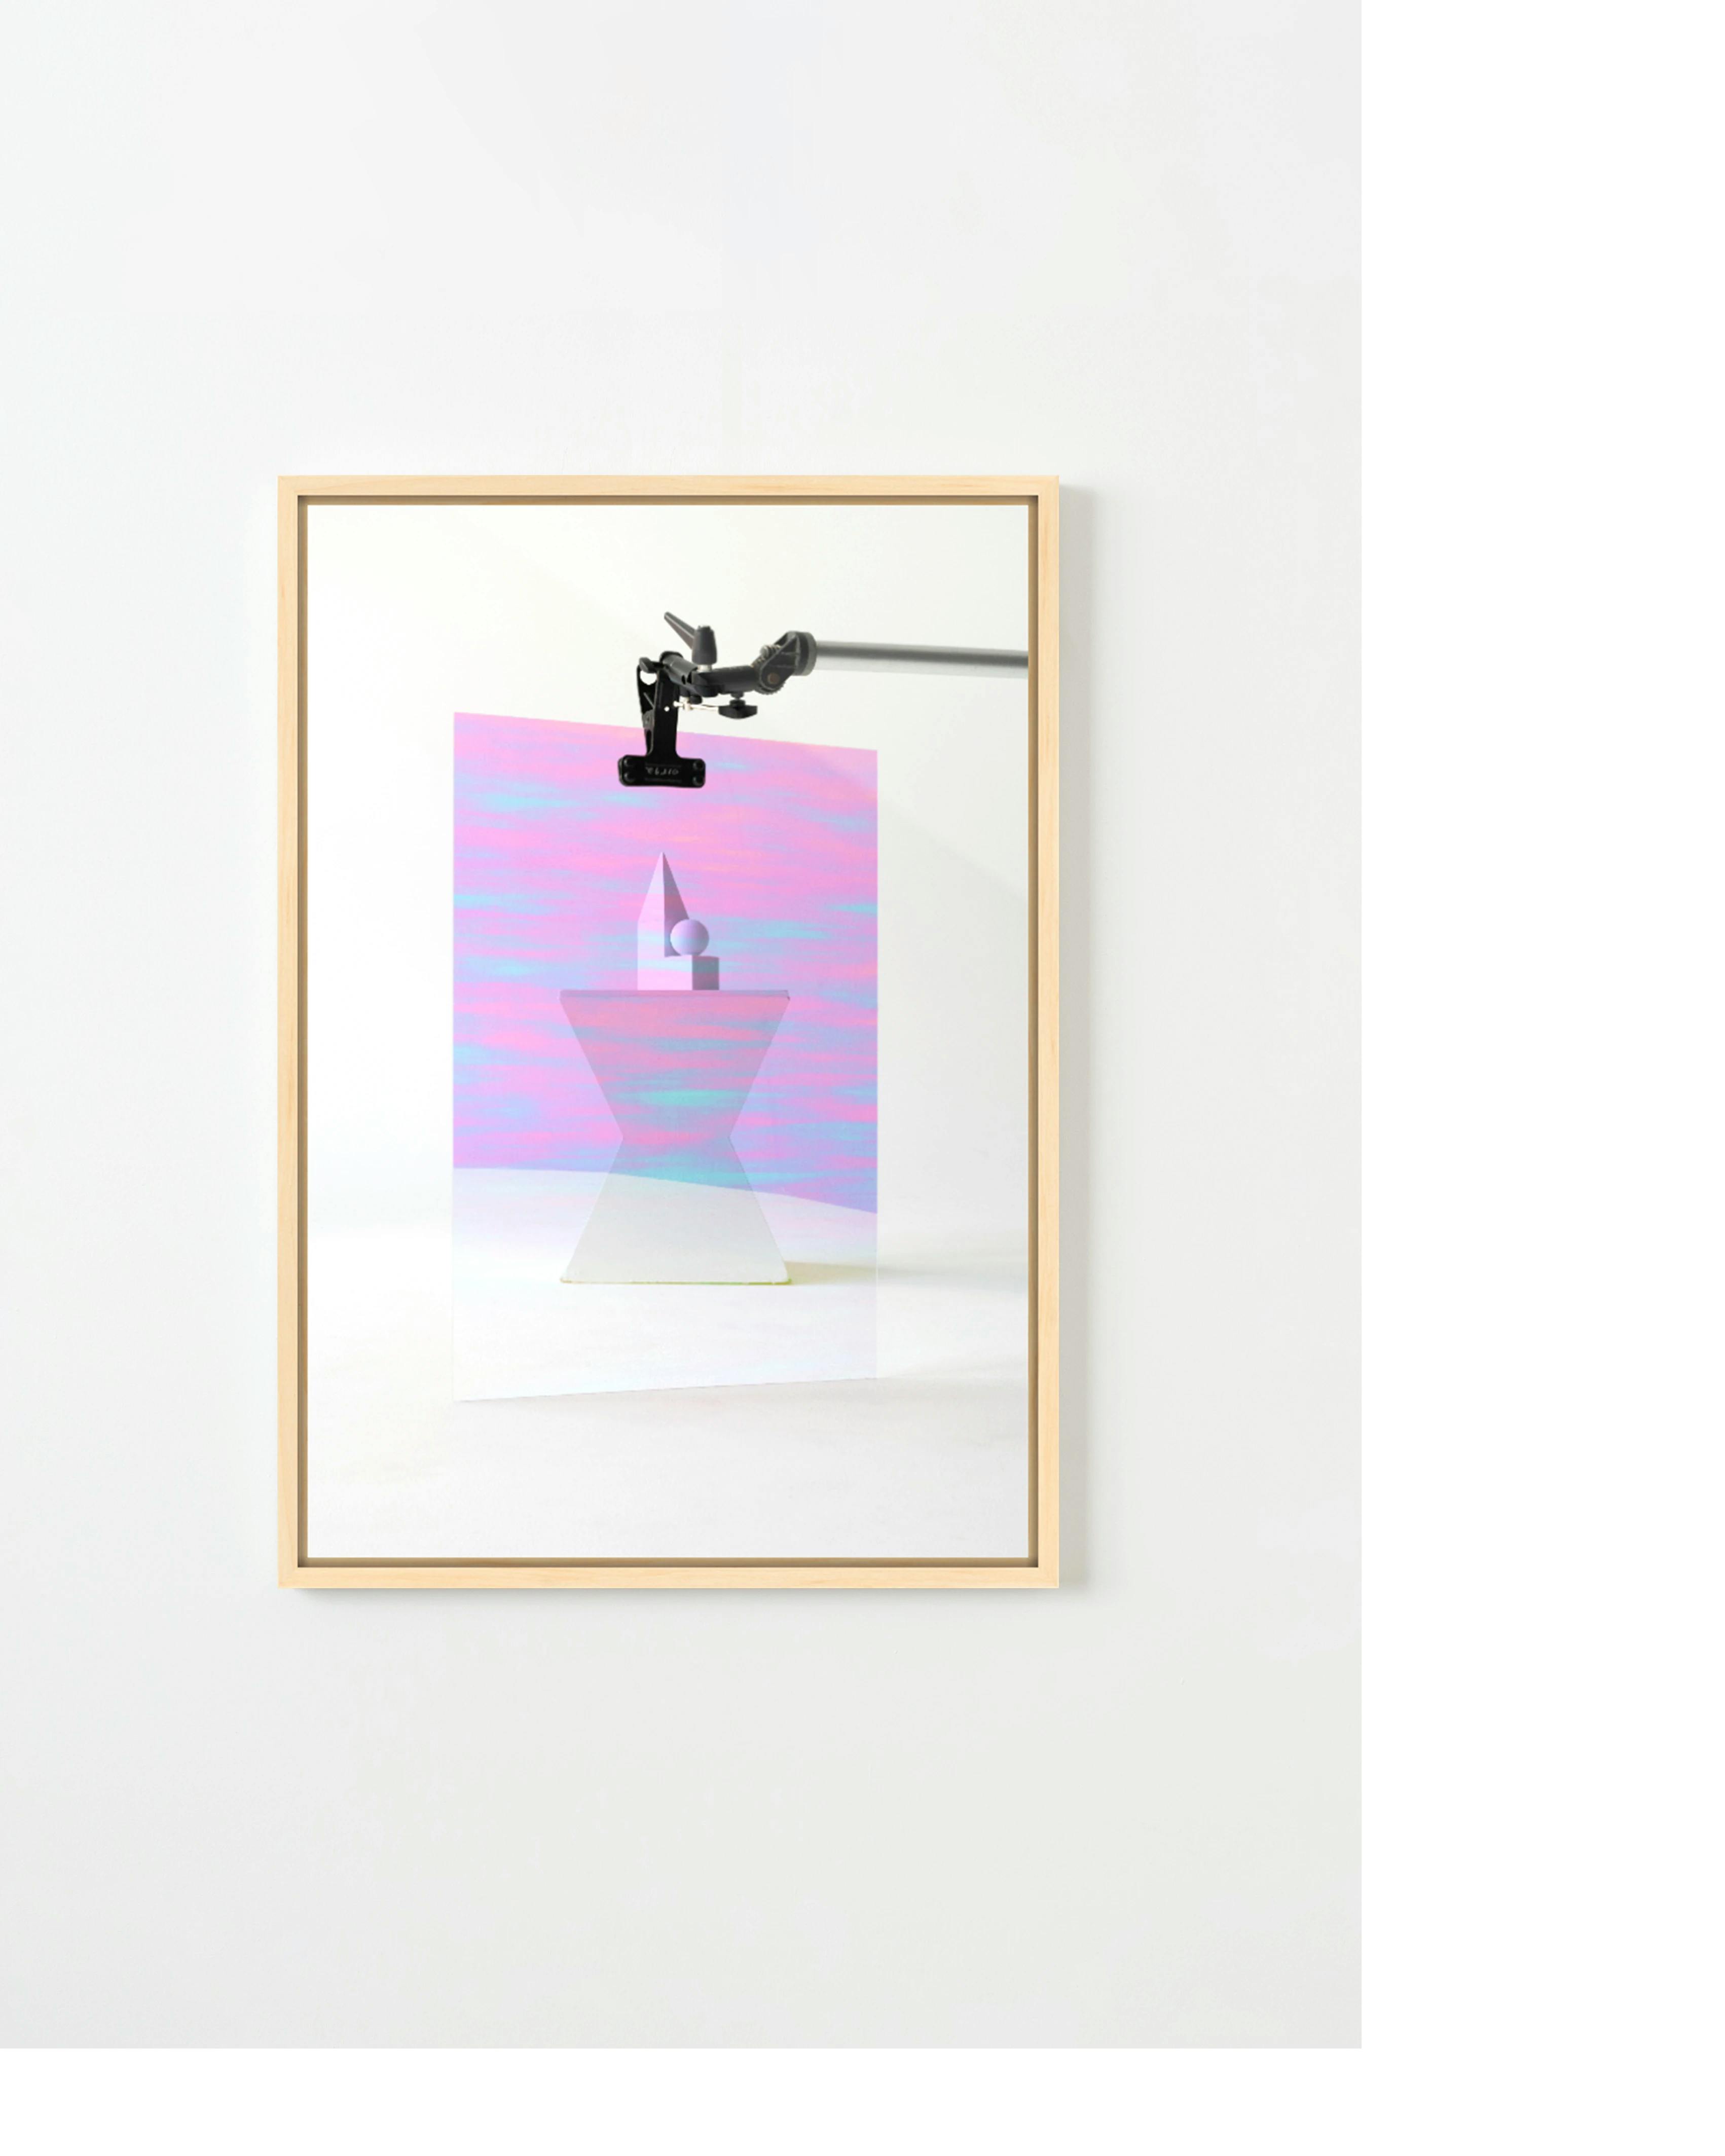 Framed, purple work with geometric tower by artist Adam Ryder.